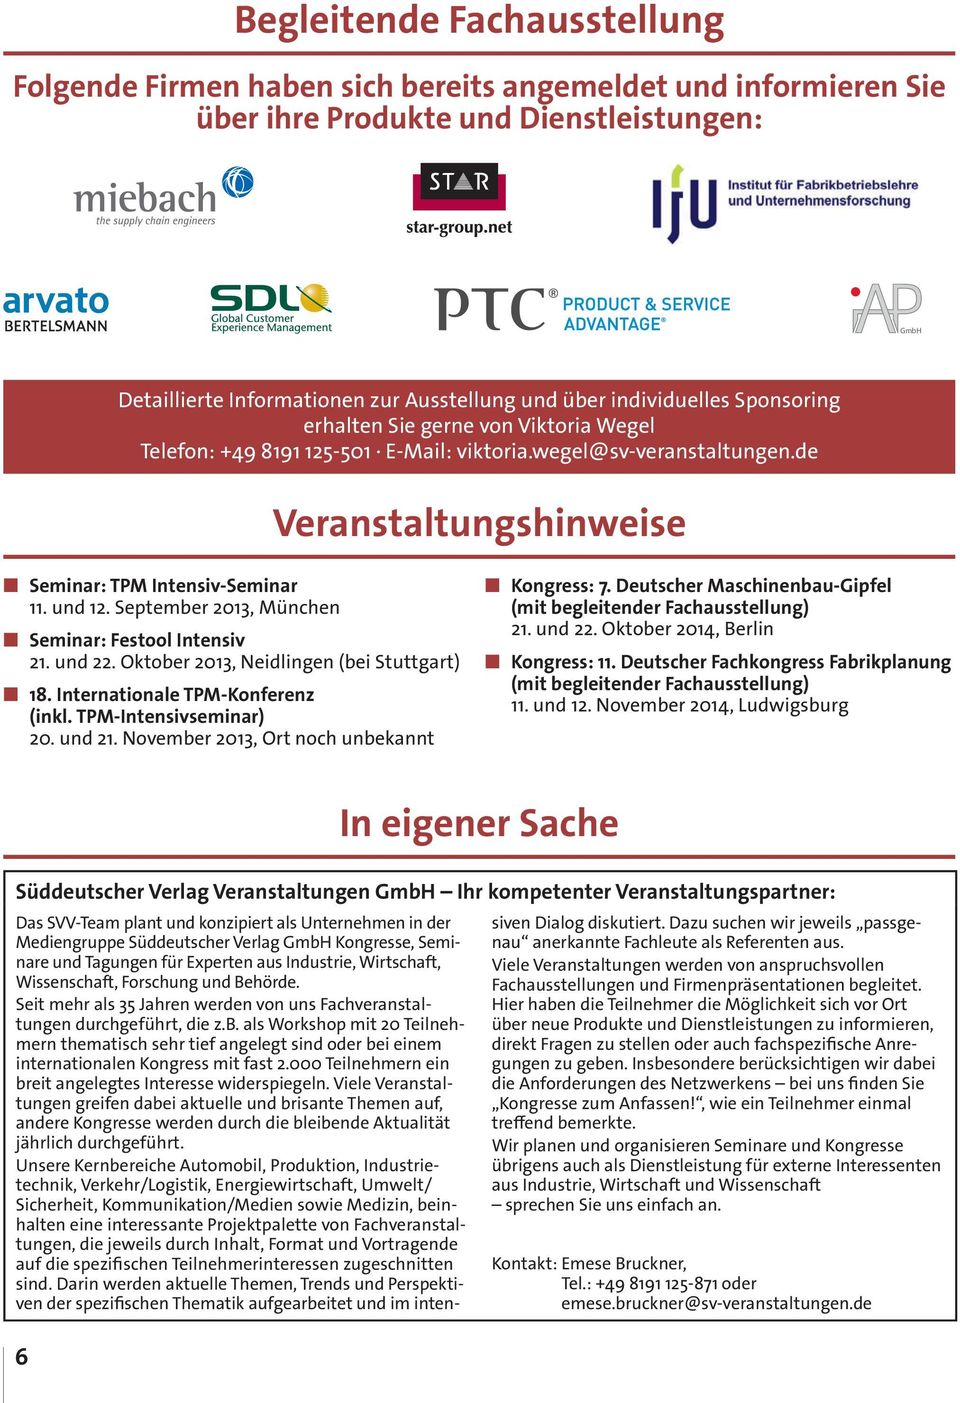 September 2013, München Seminar: Festool Intensiv 21. und 22. Oktober 2013, Neidlingen (bei Stuttgart) 18. Internationale TPM-Konferenz (inkl. TPM-Intensivseminar) 20. und 21.